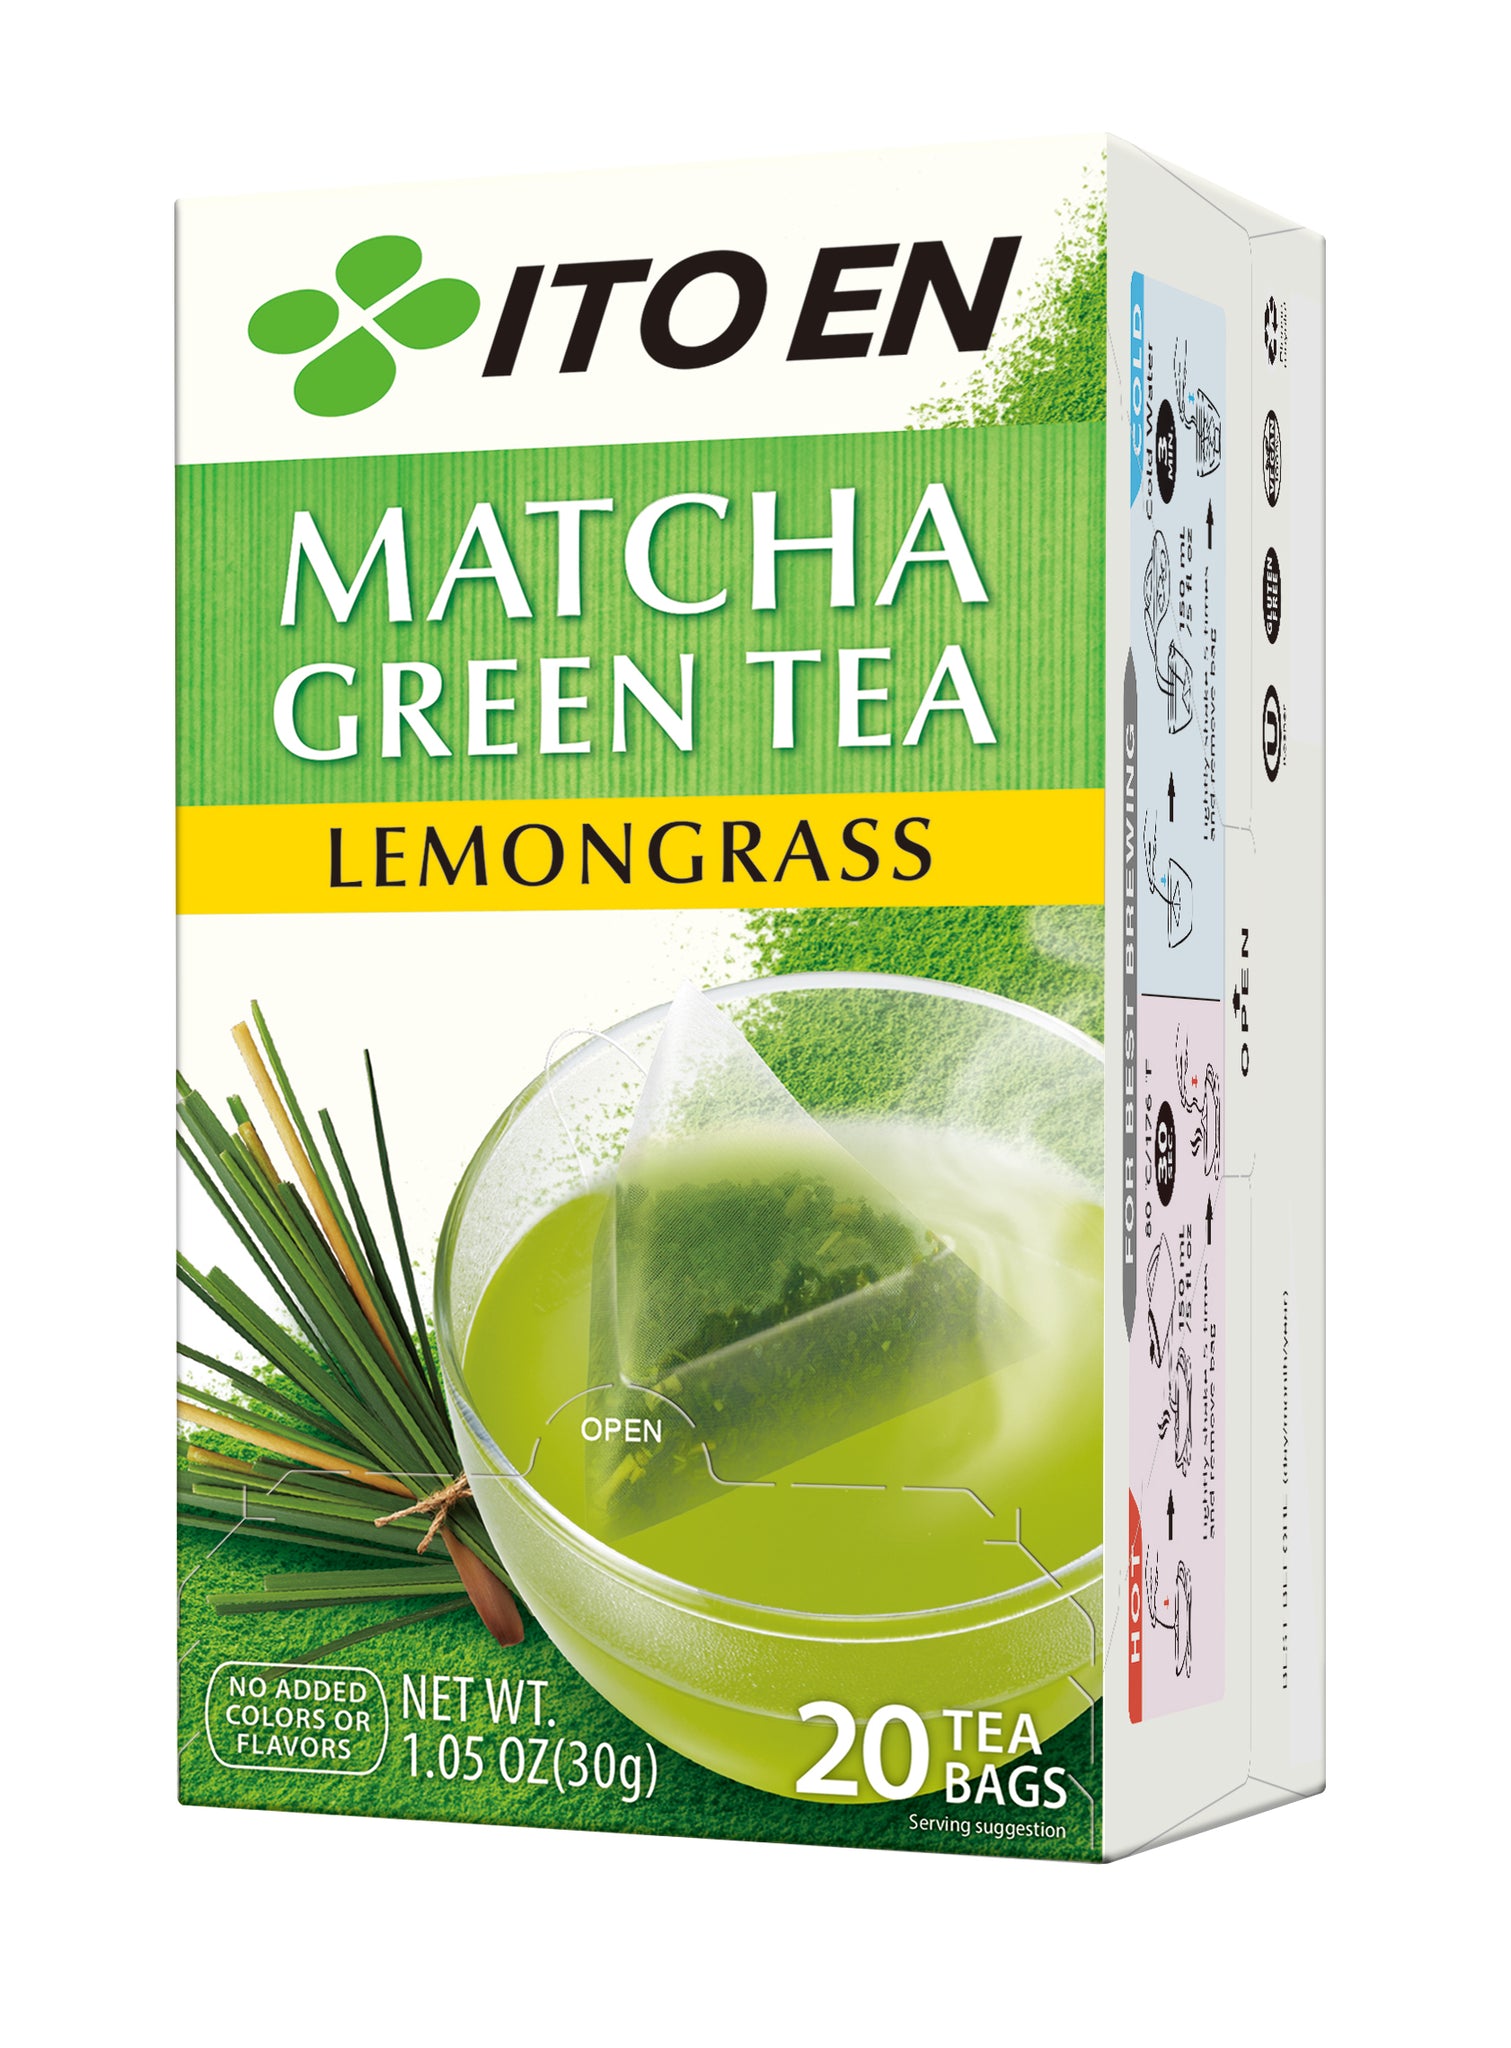 Matcha Green Tea Lemongrass Tea Bags